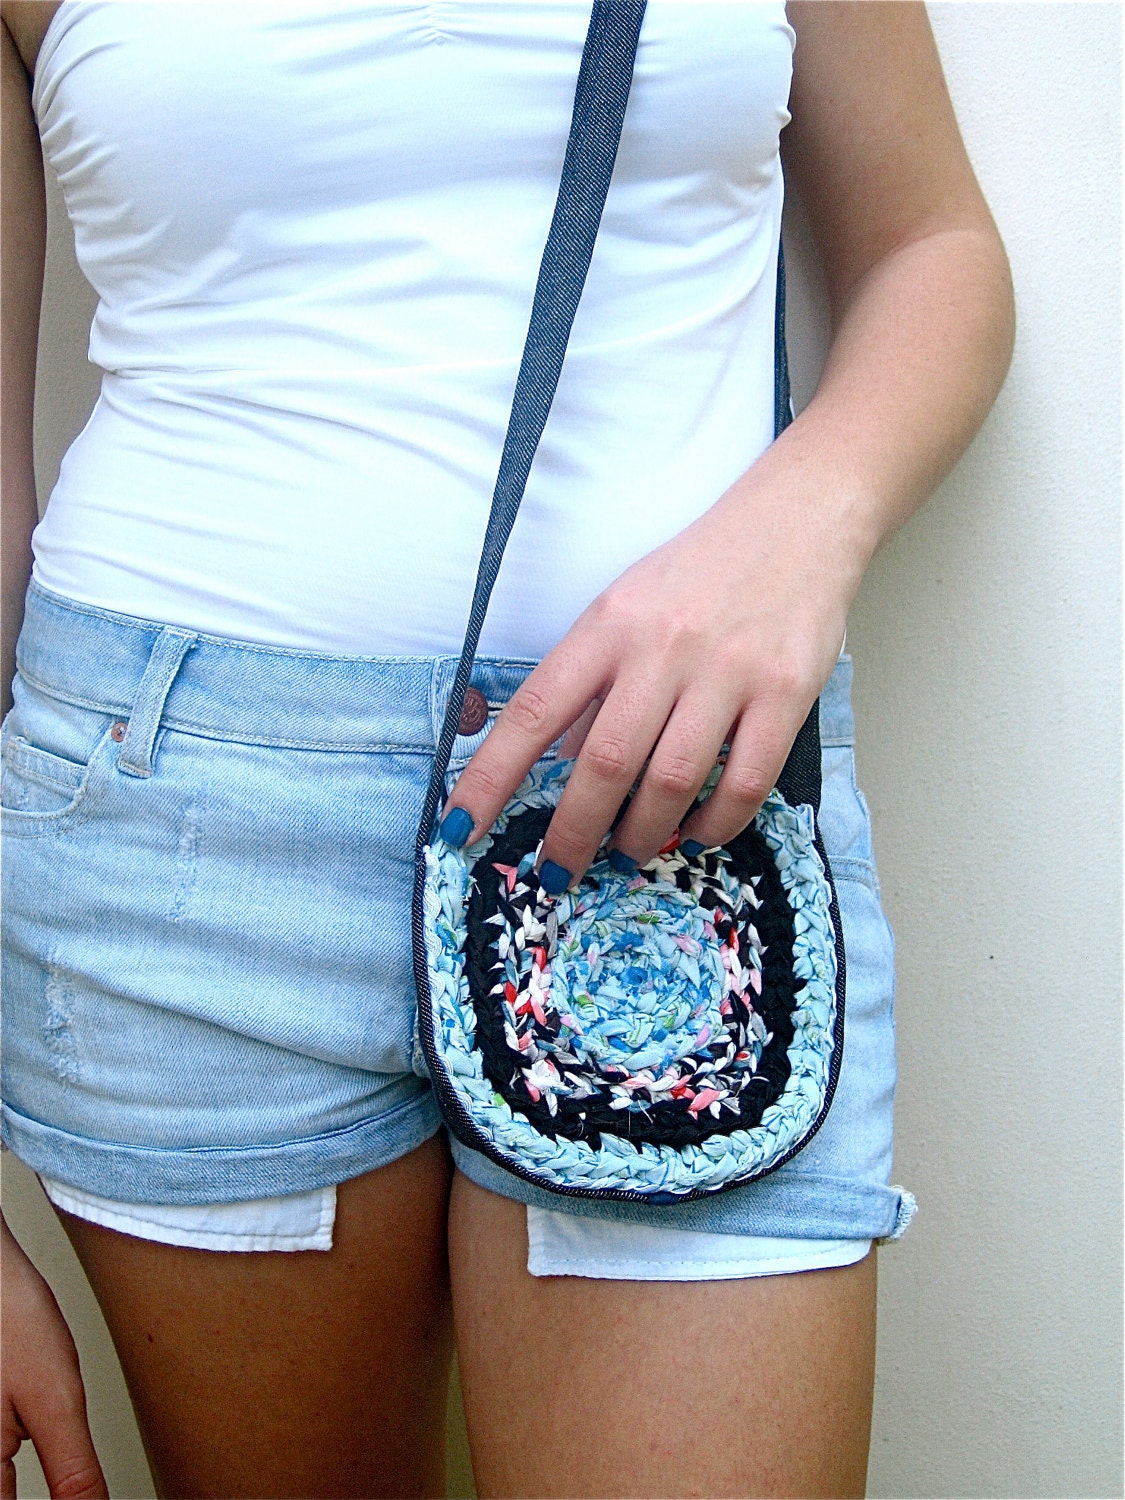 Handbag purse fabric crochet light blue recycled eco friendly cotton textile small denim black white red cute handmade for a woman or a girl - TUKON